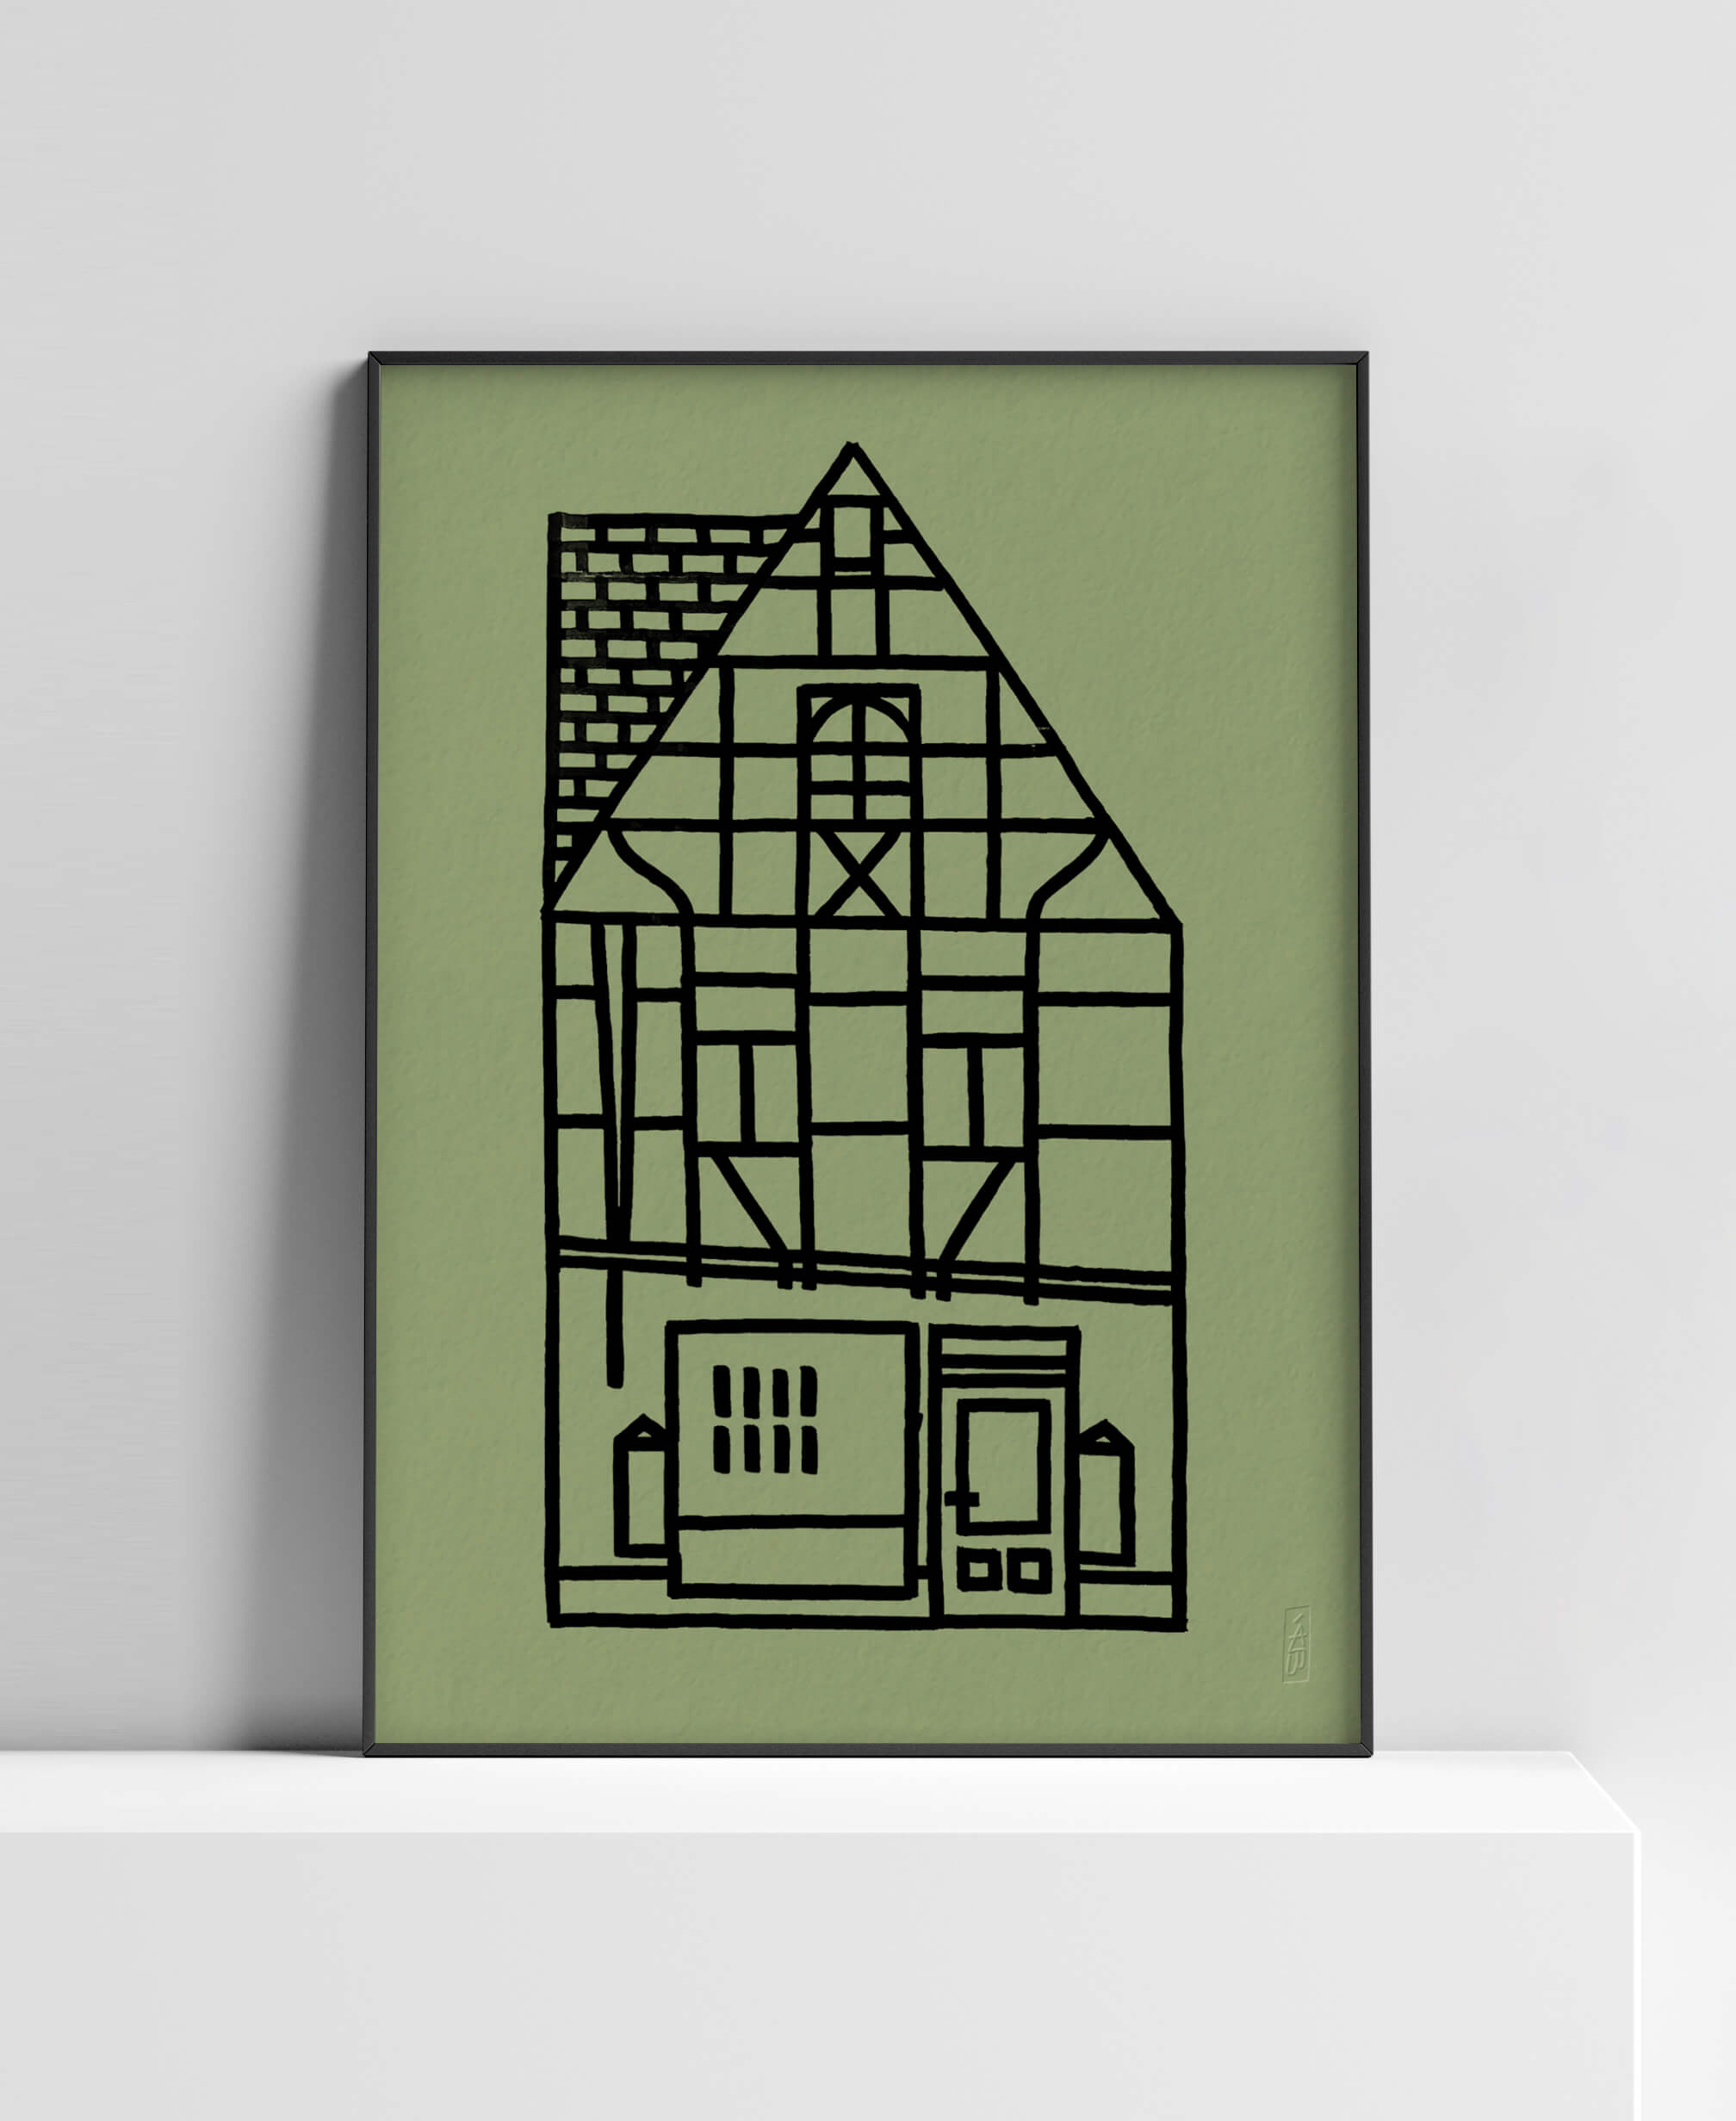 studio_andrebritz_buttermarkt_poster_house_004_4